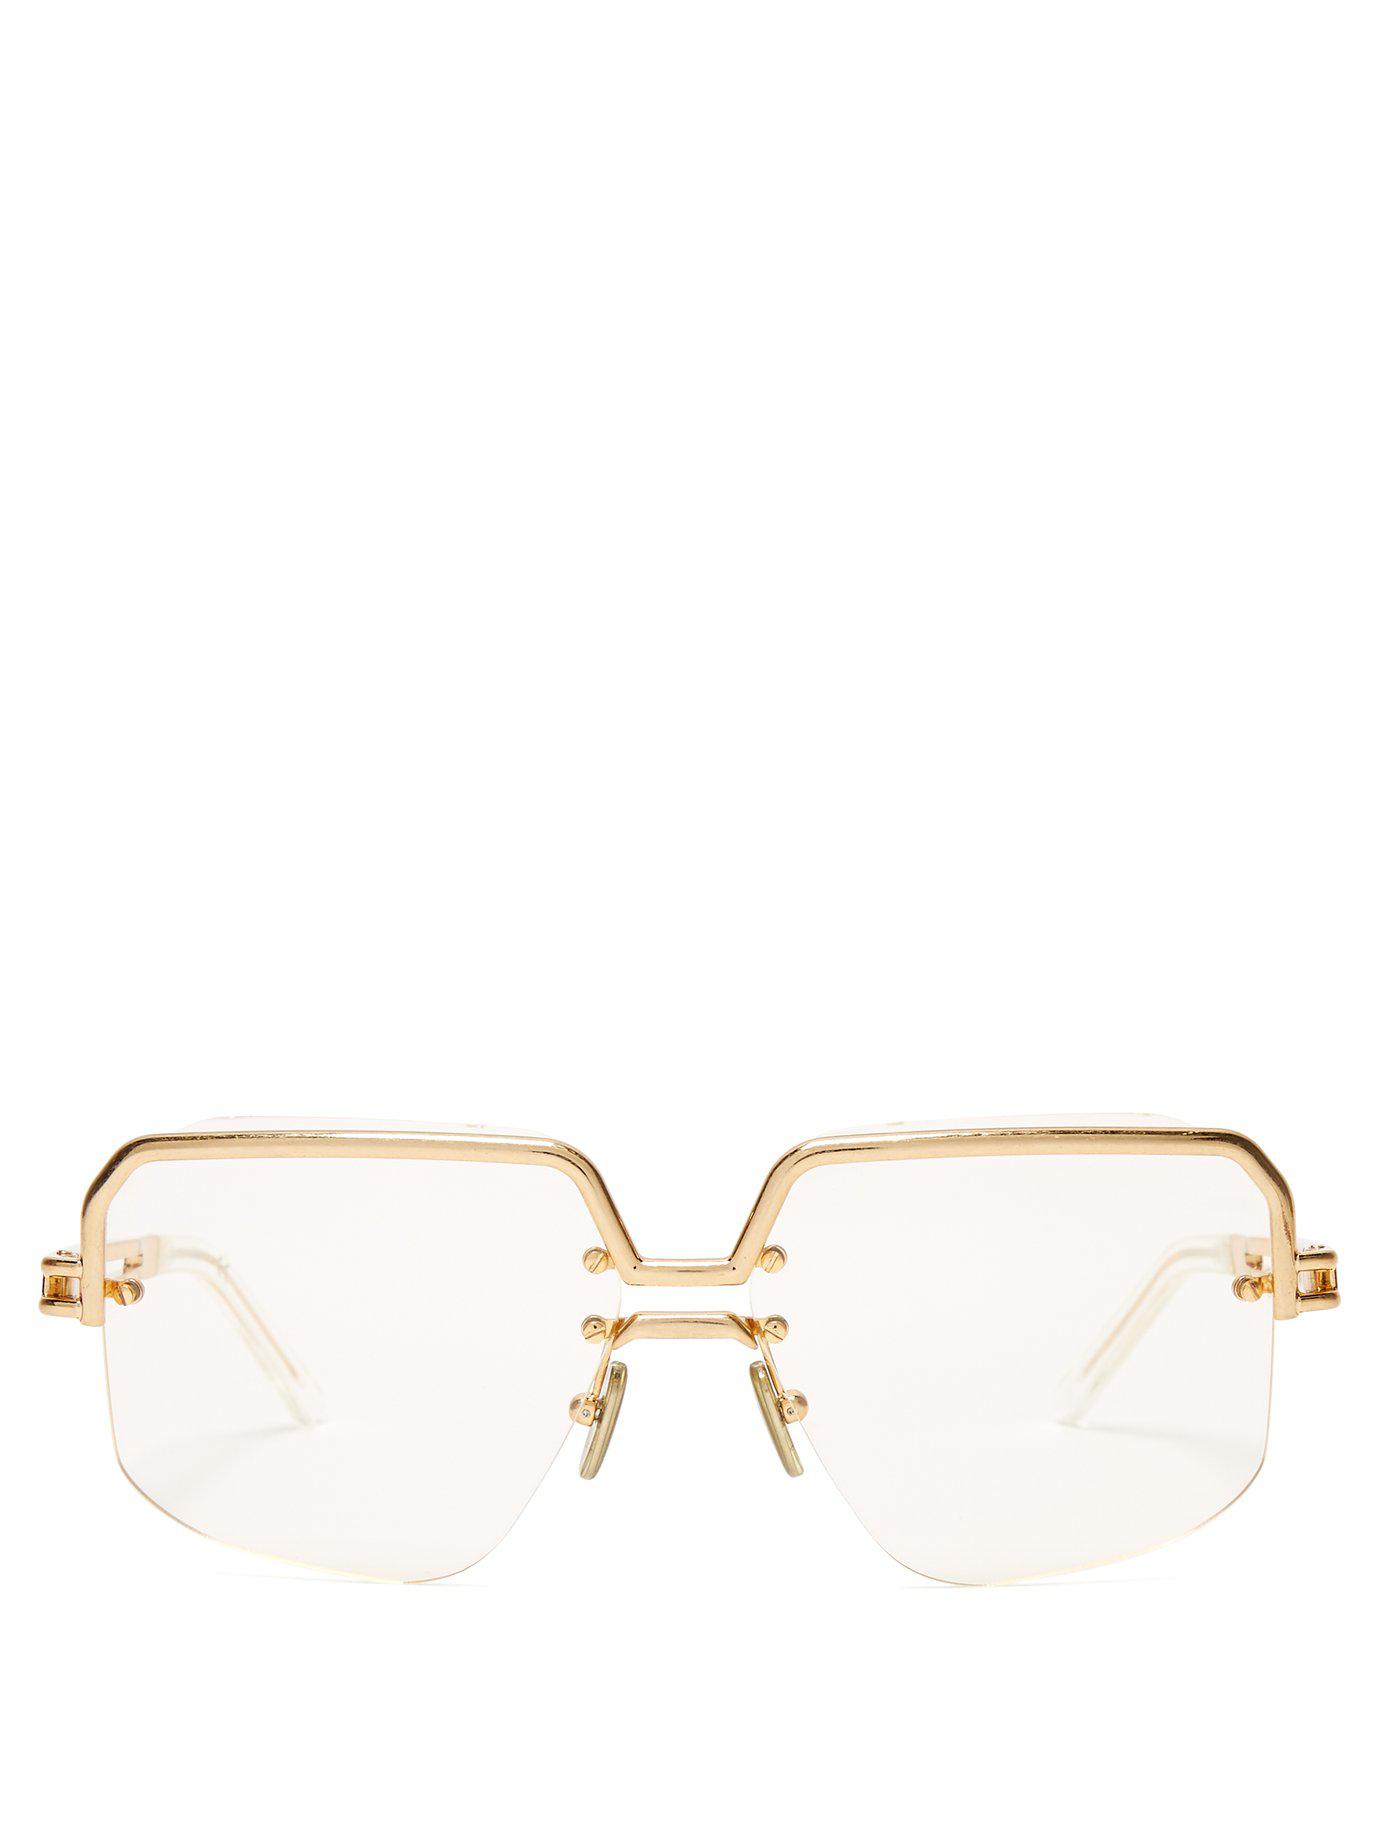 Céline Gold Tone Top Frame Sunglasses in Metallic - Lyst